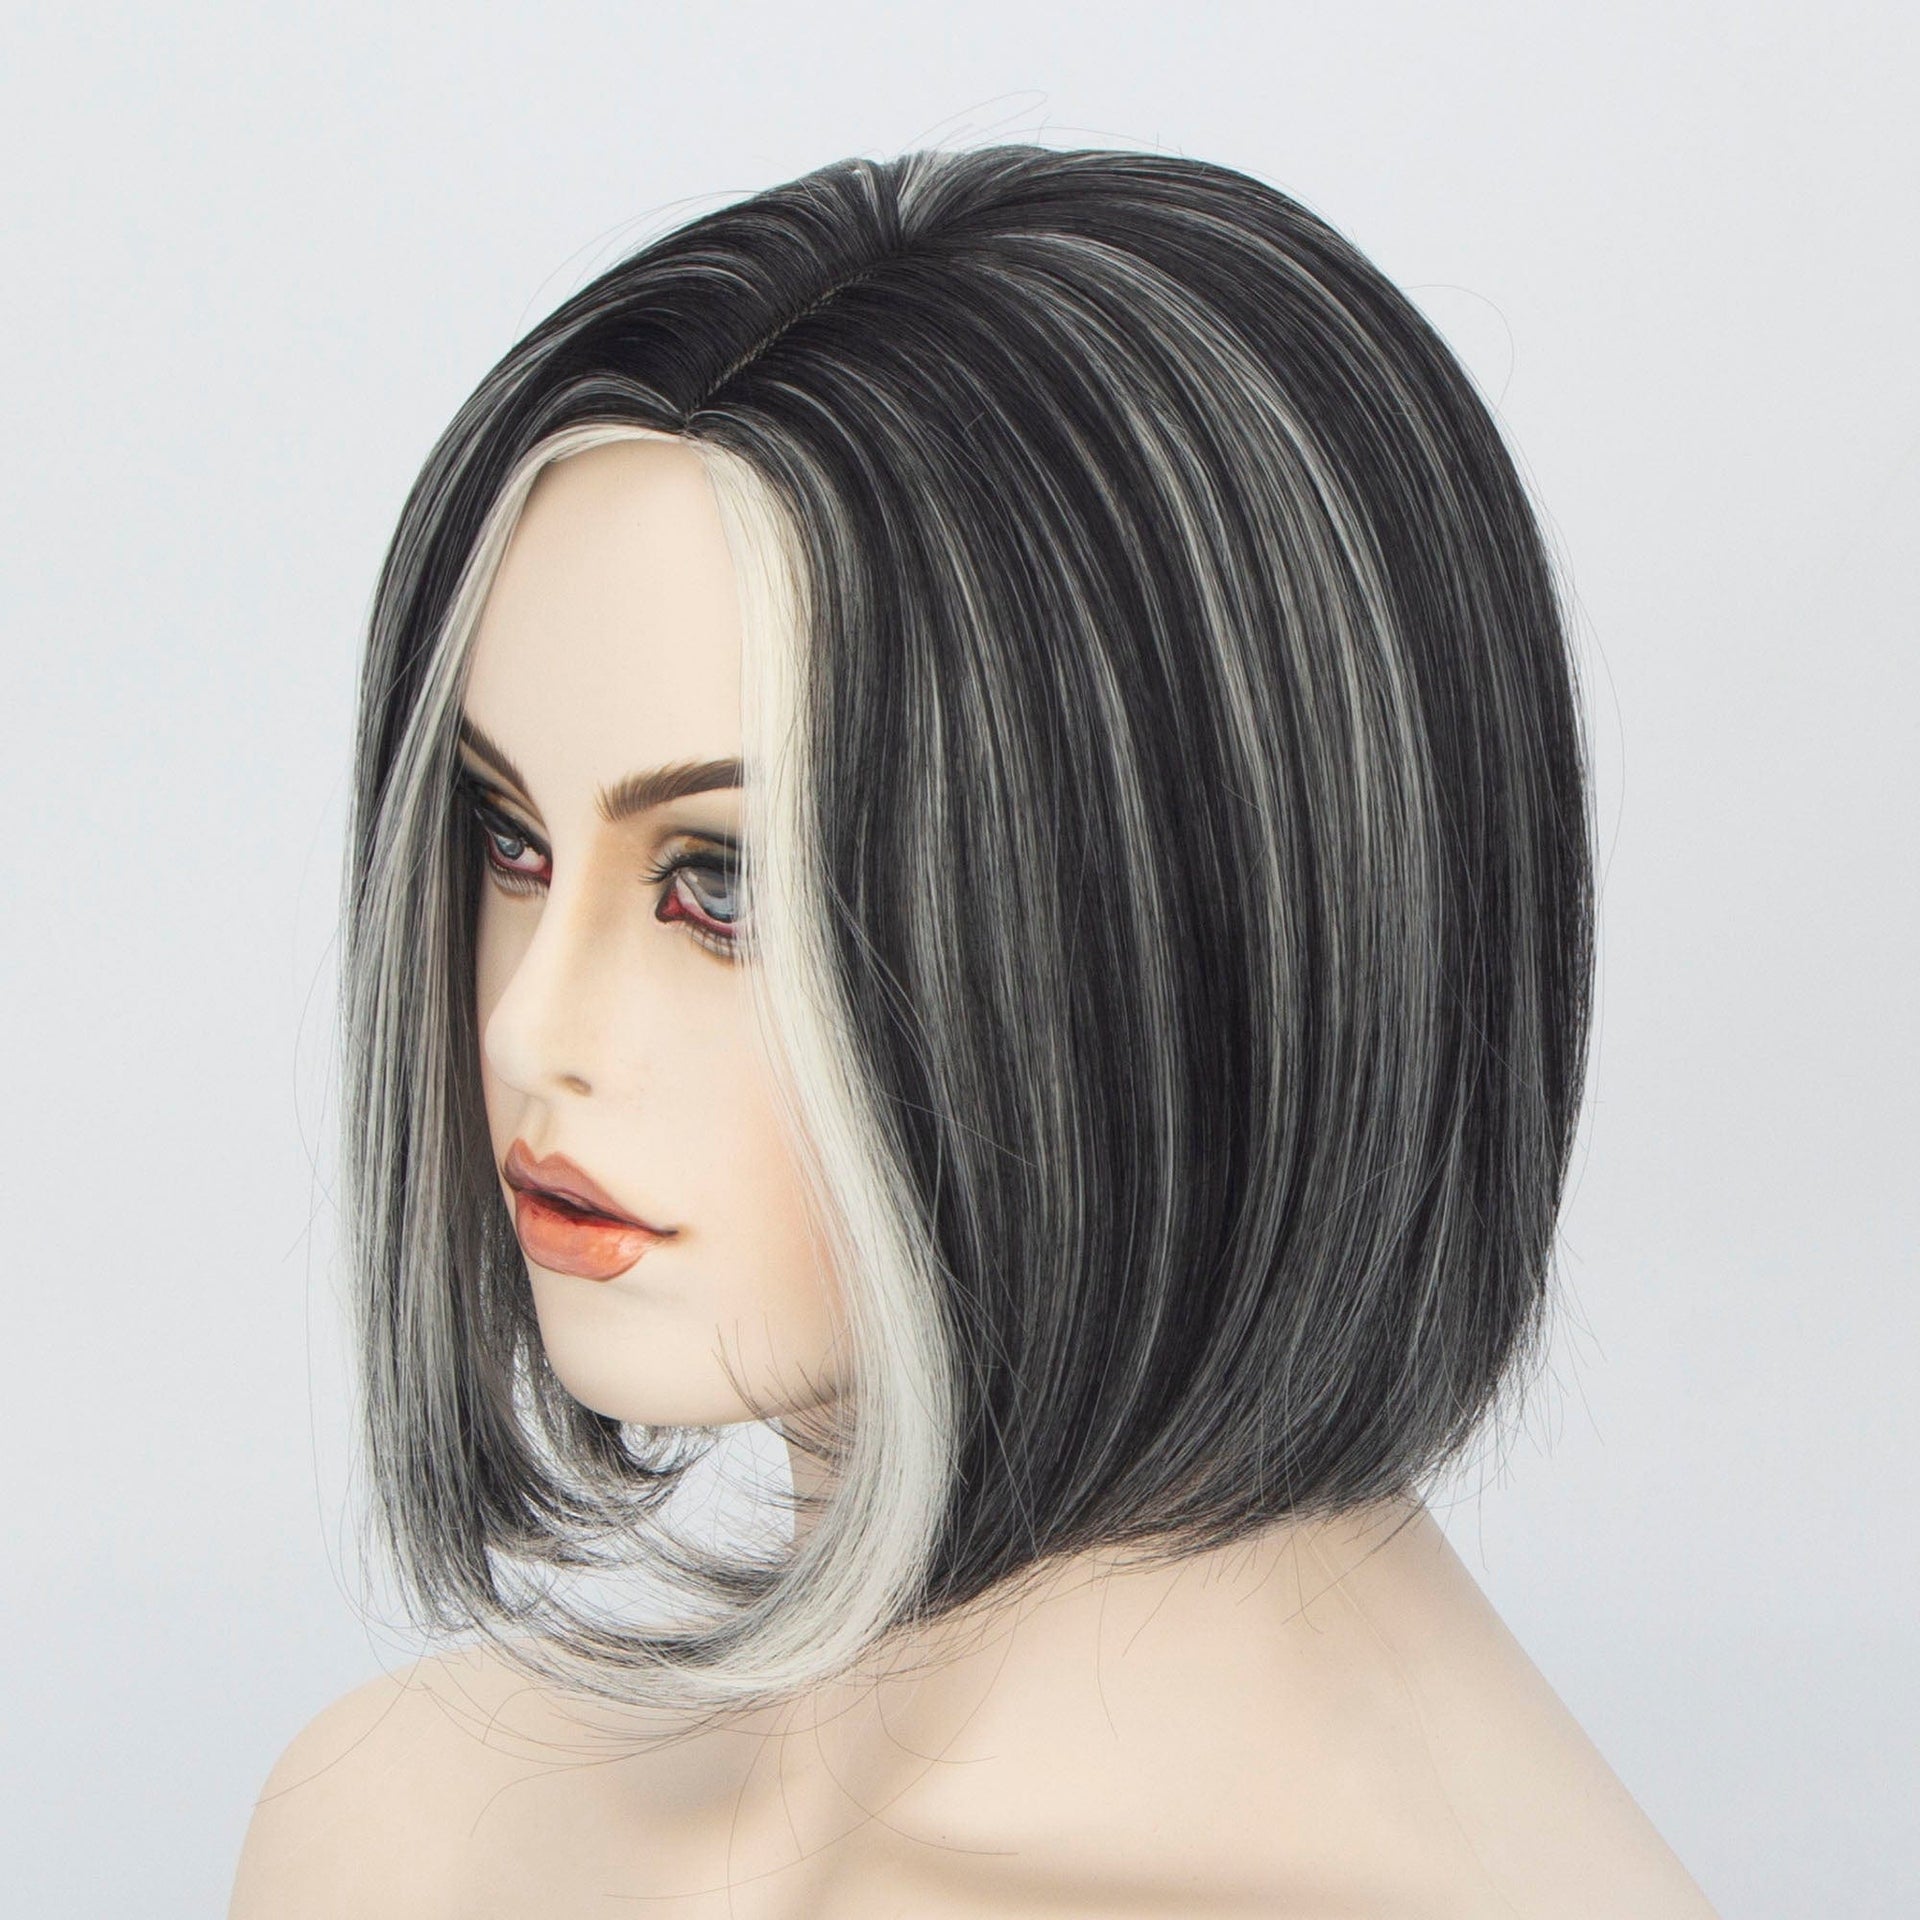 nevermindyrhead Women Black White Salt And Pepper Color Short Straight Bob Side Part Wig